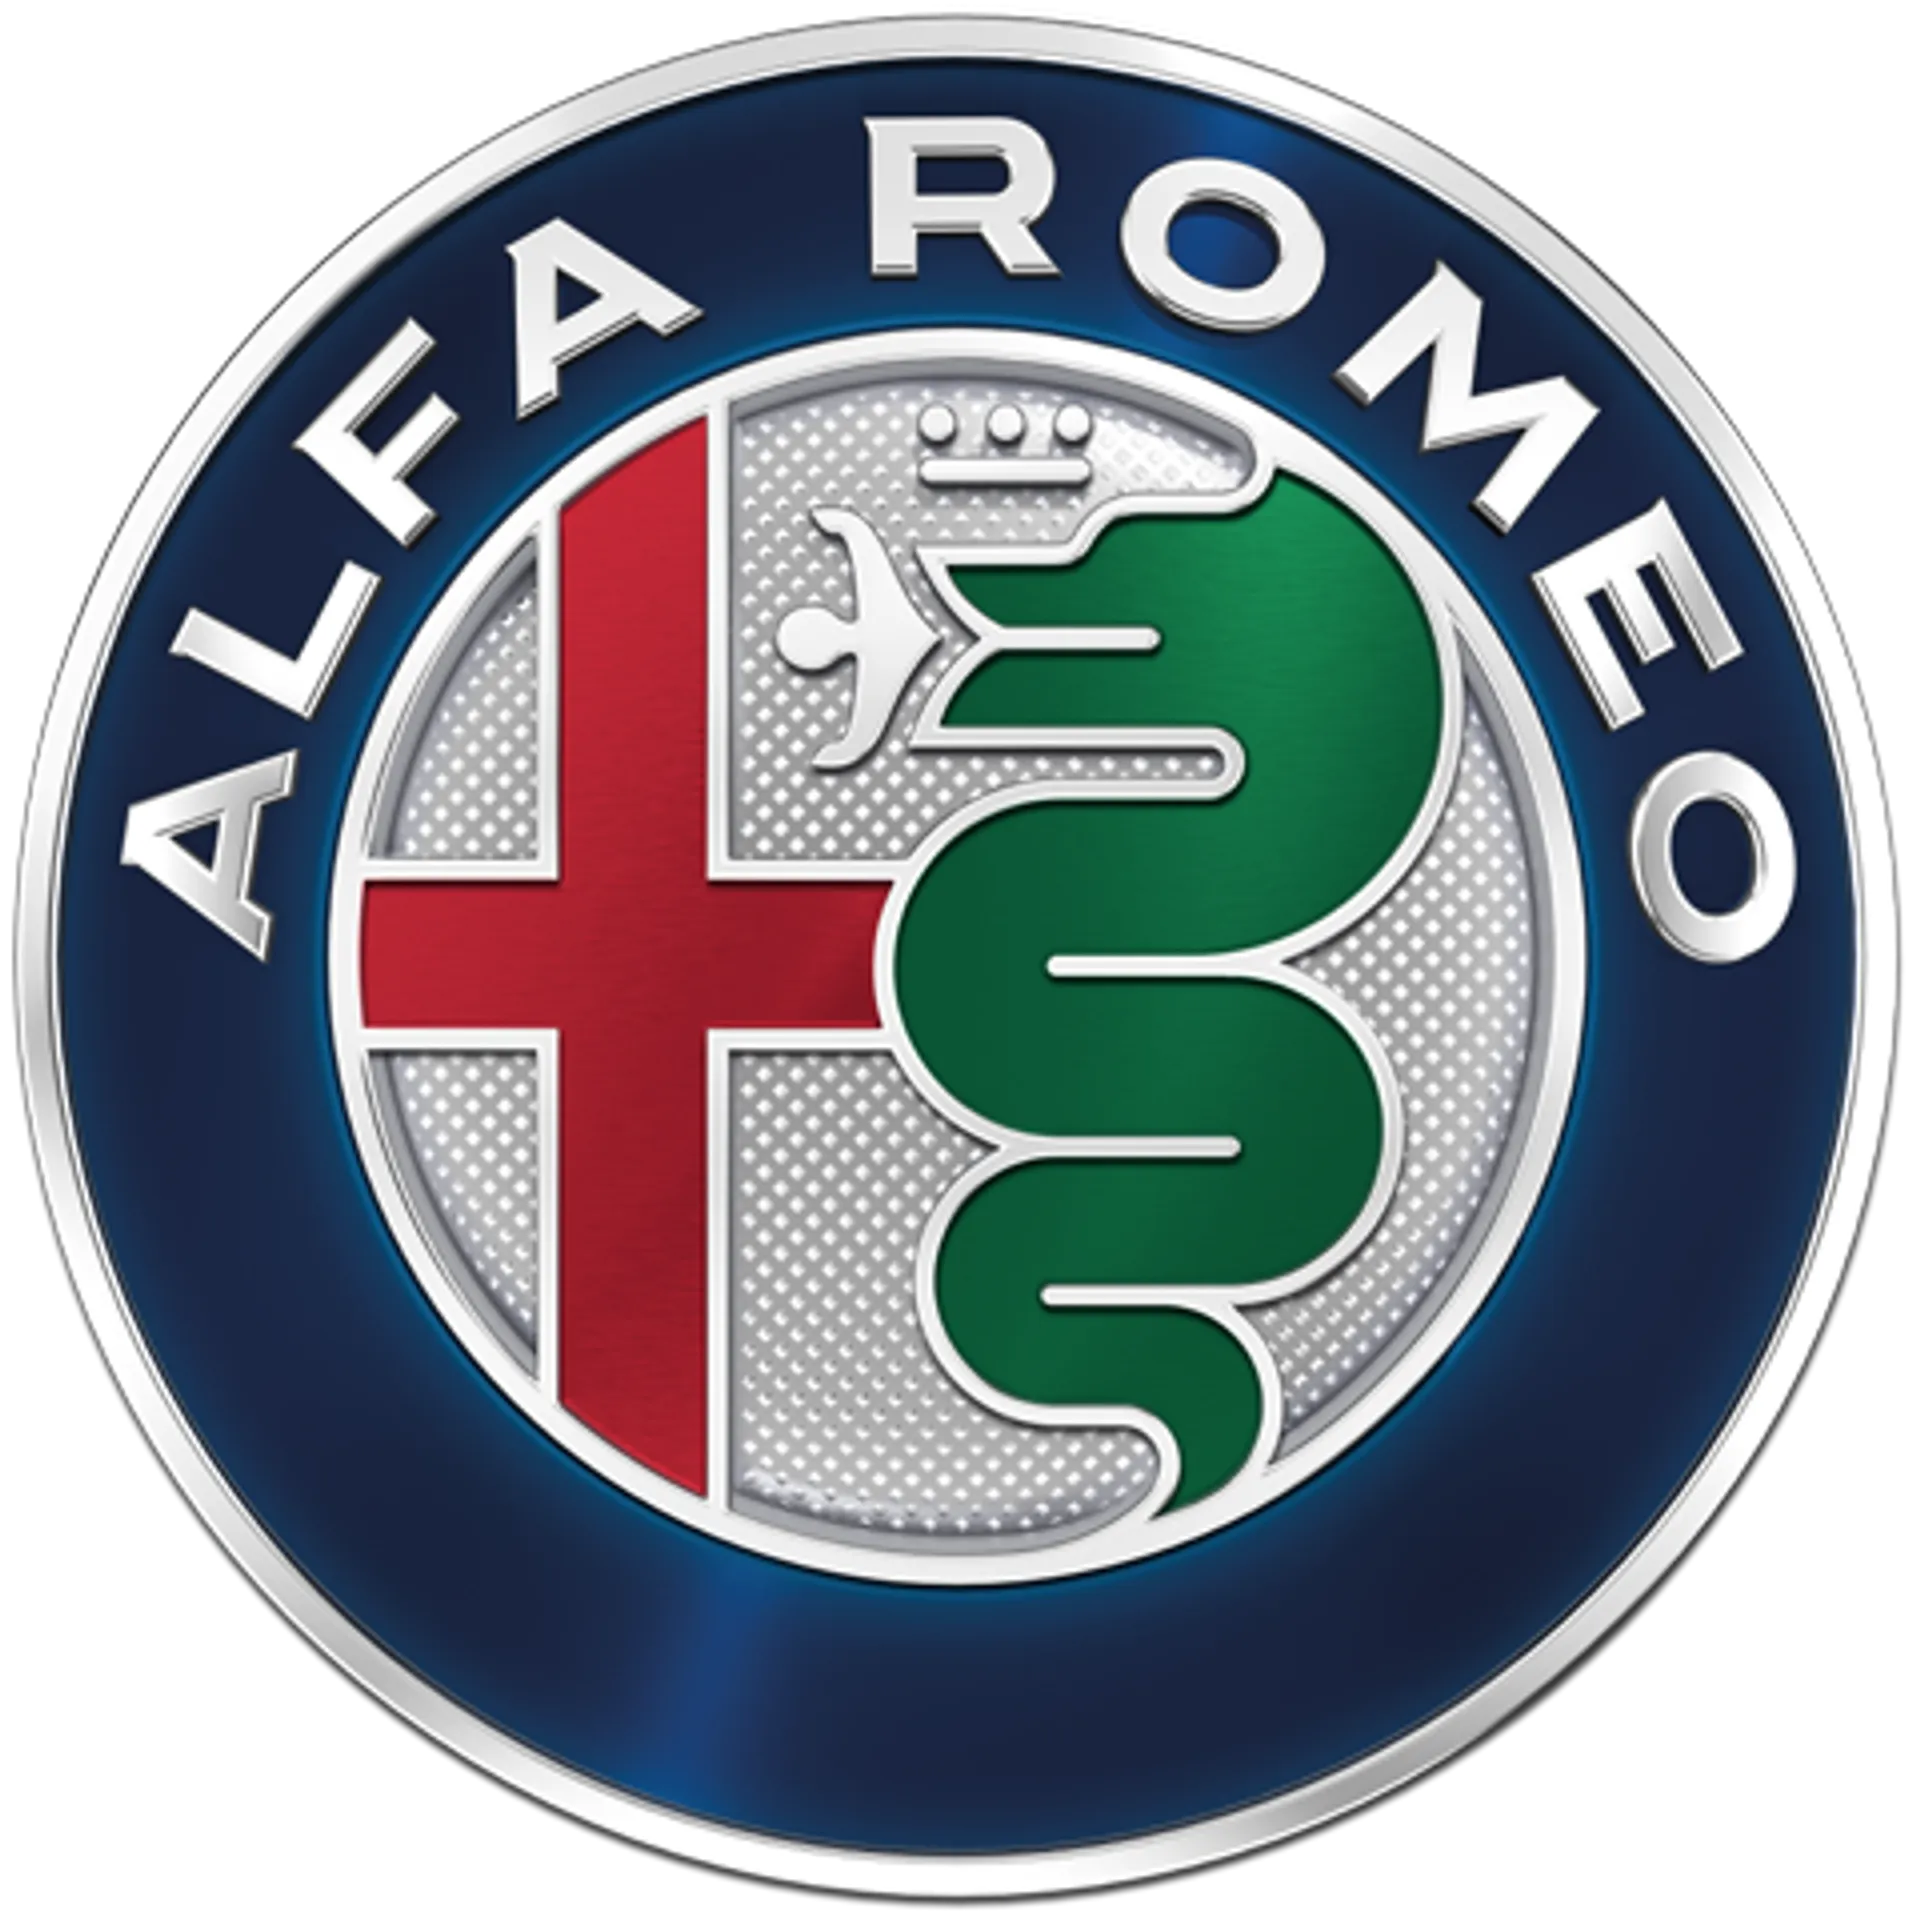 ALFA ROMEO logo. Current catalogue